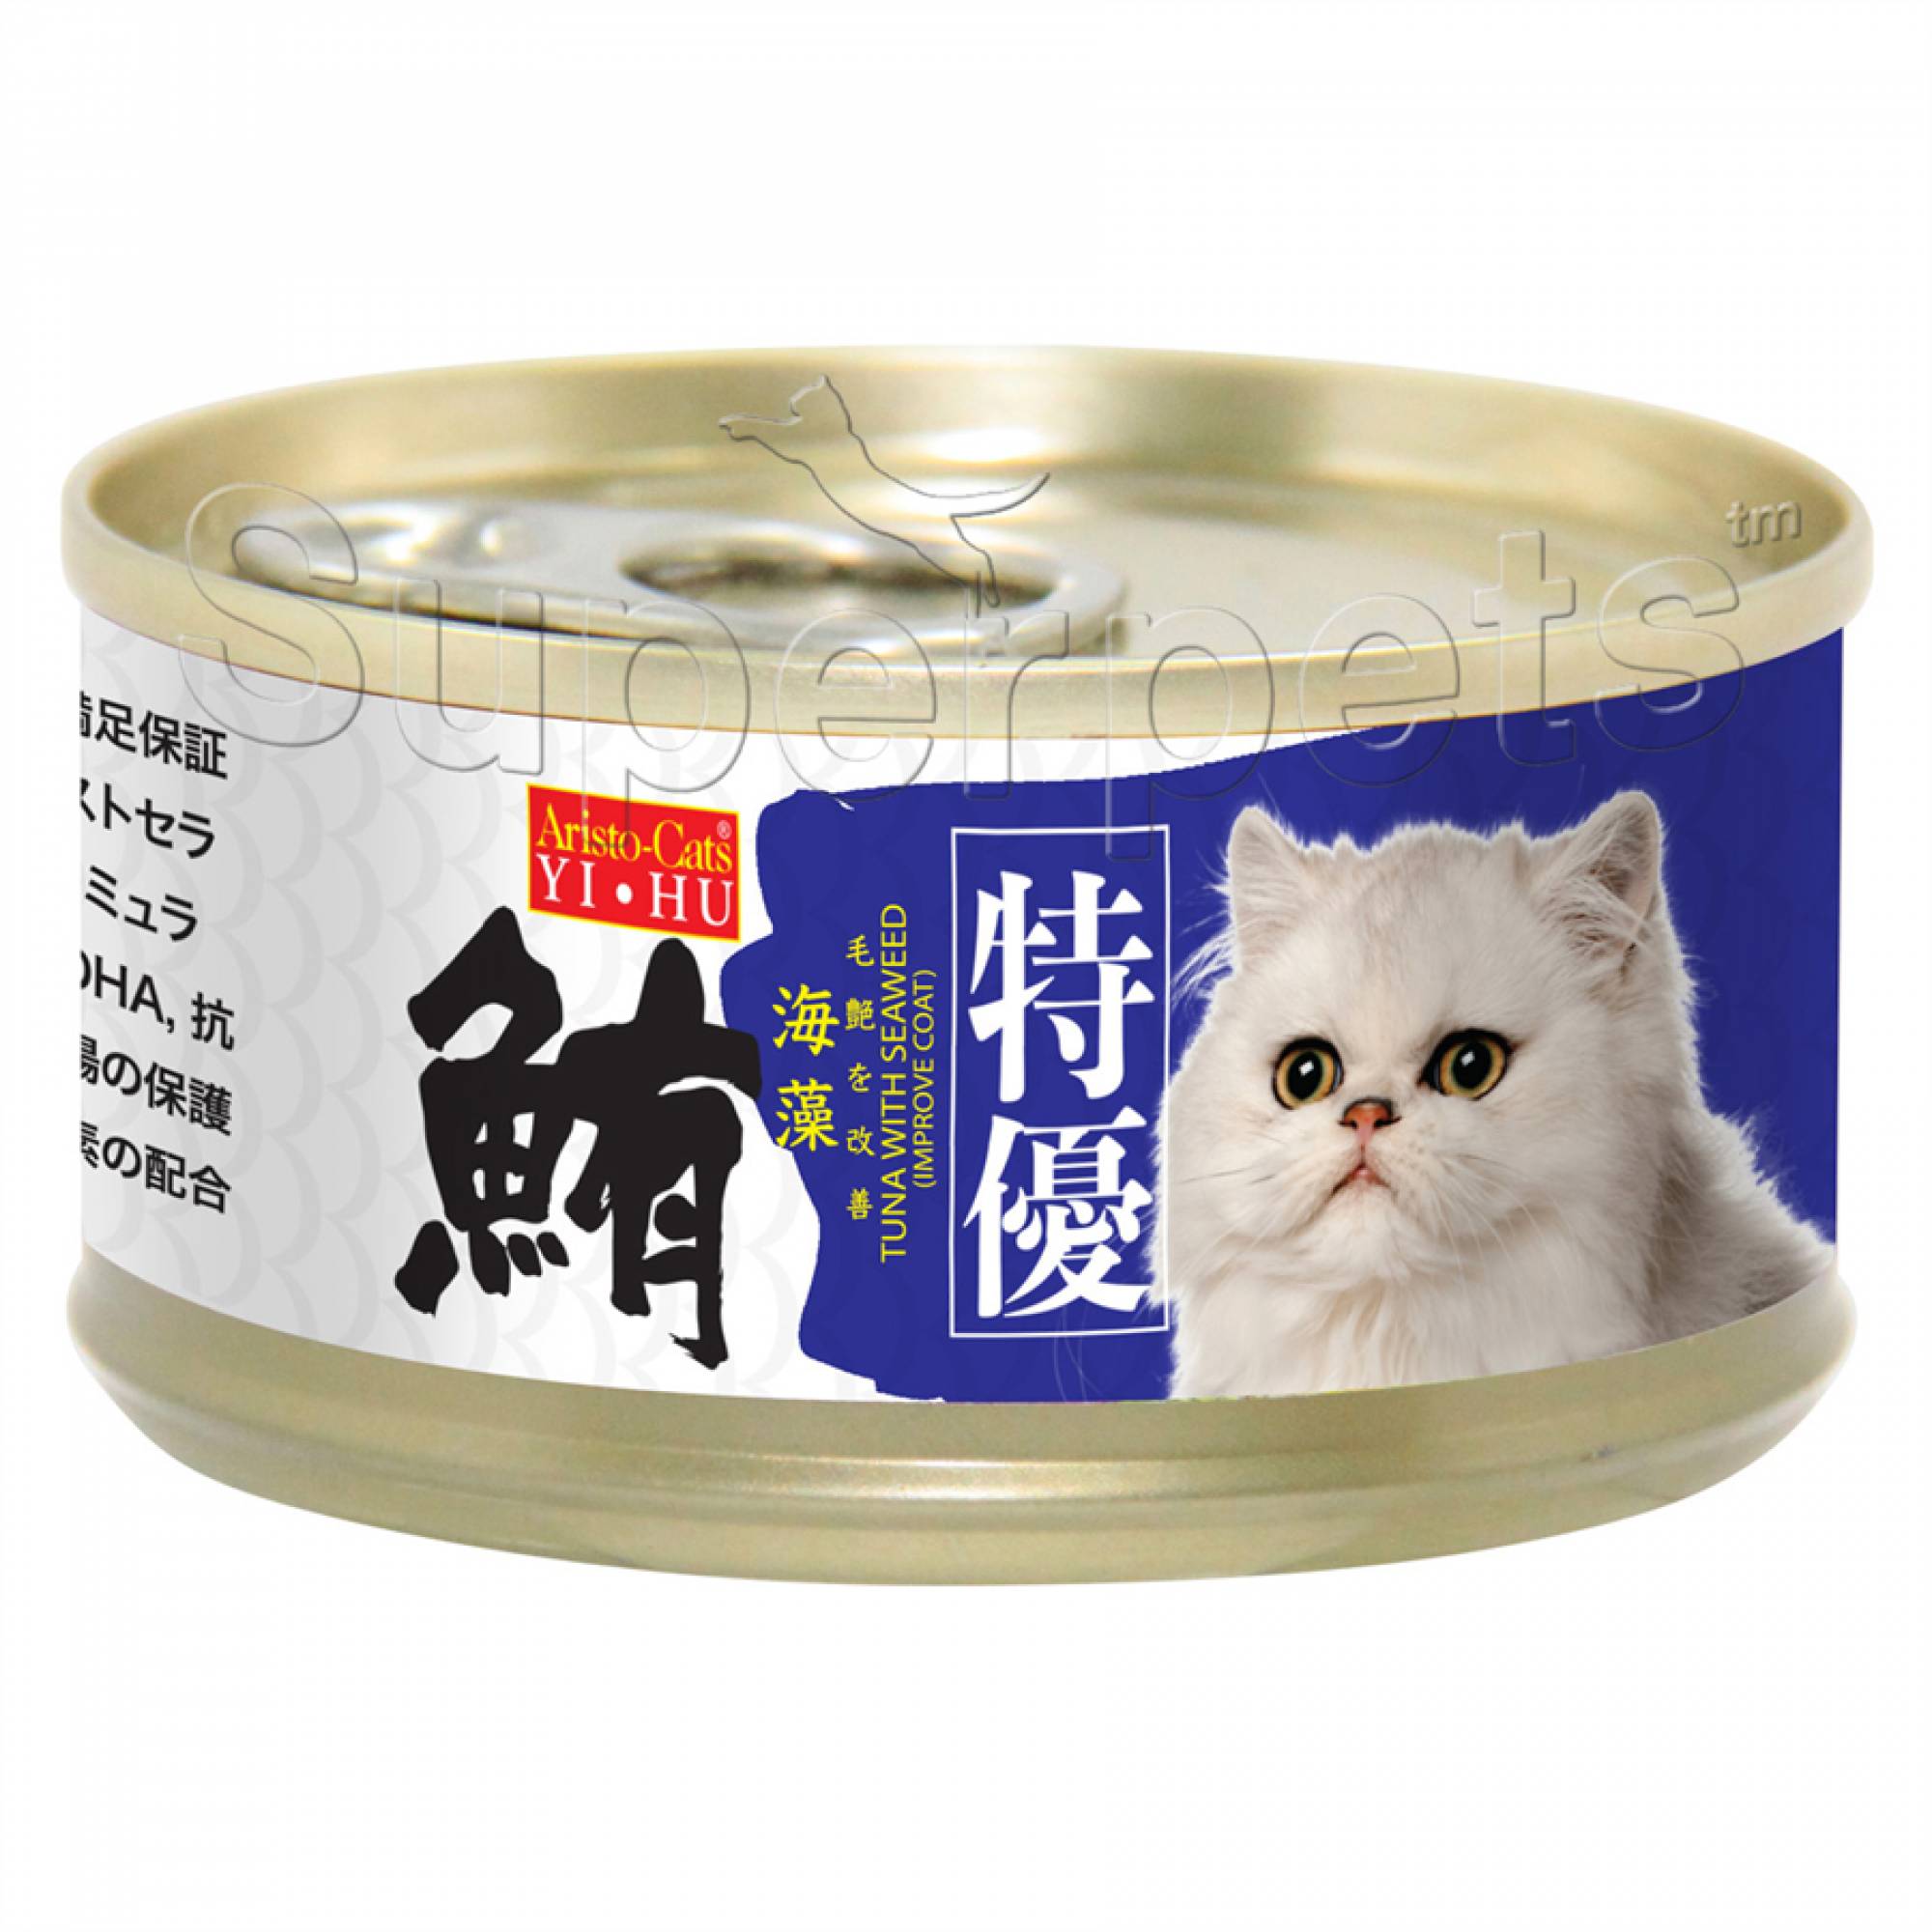 Aristo-Cats - Premium Plus (Export) - Tuna with Seaweed 80g